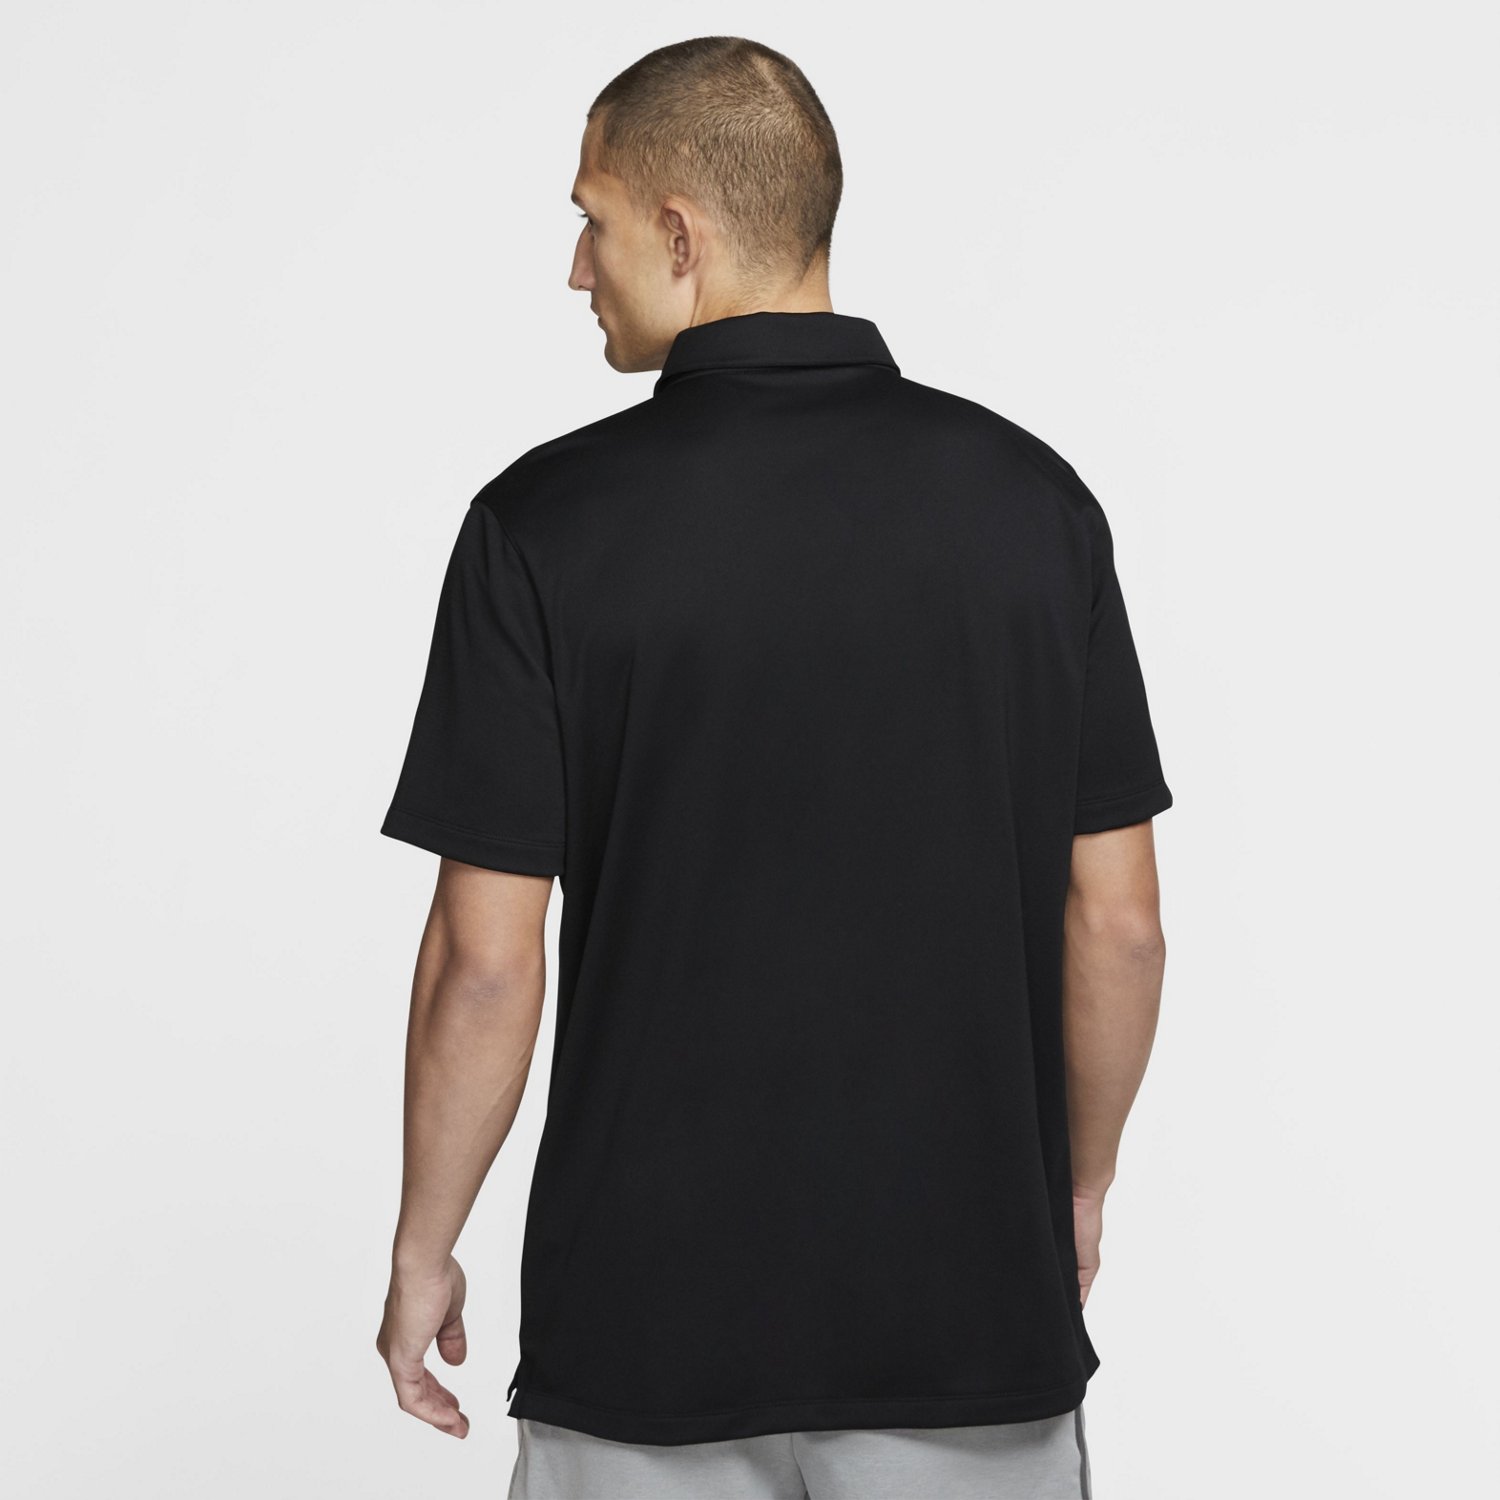 Nike Men's Dri-FIT Football Polo Shirt